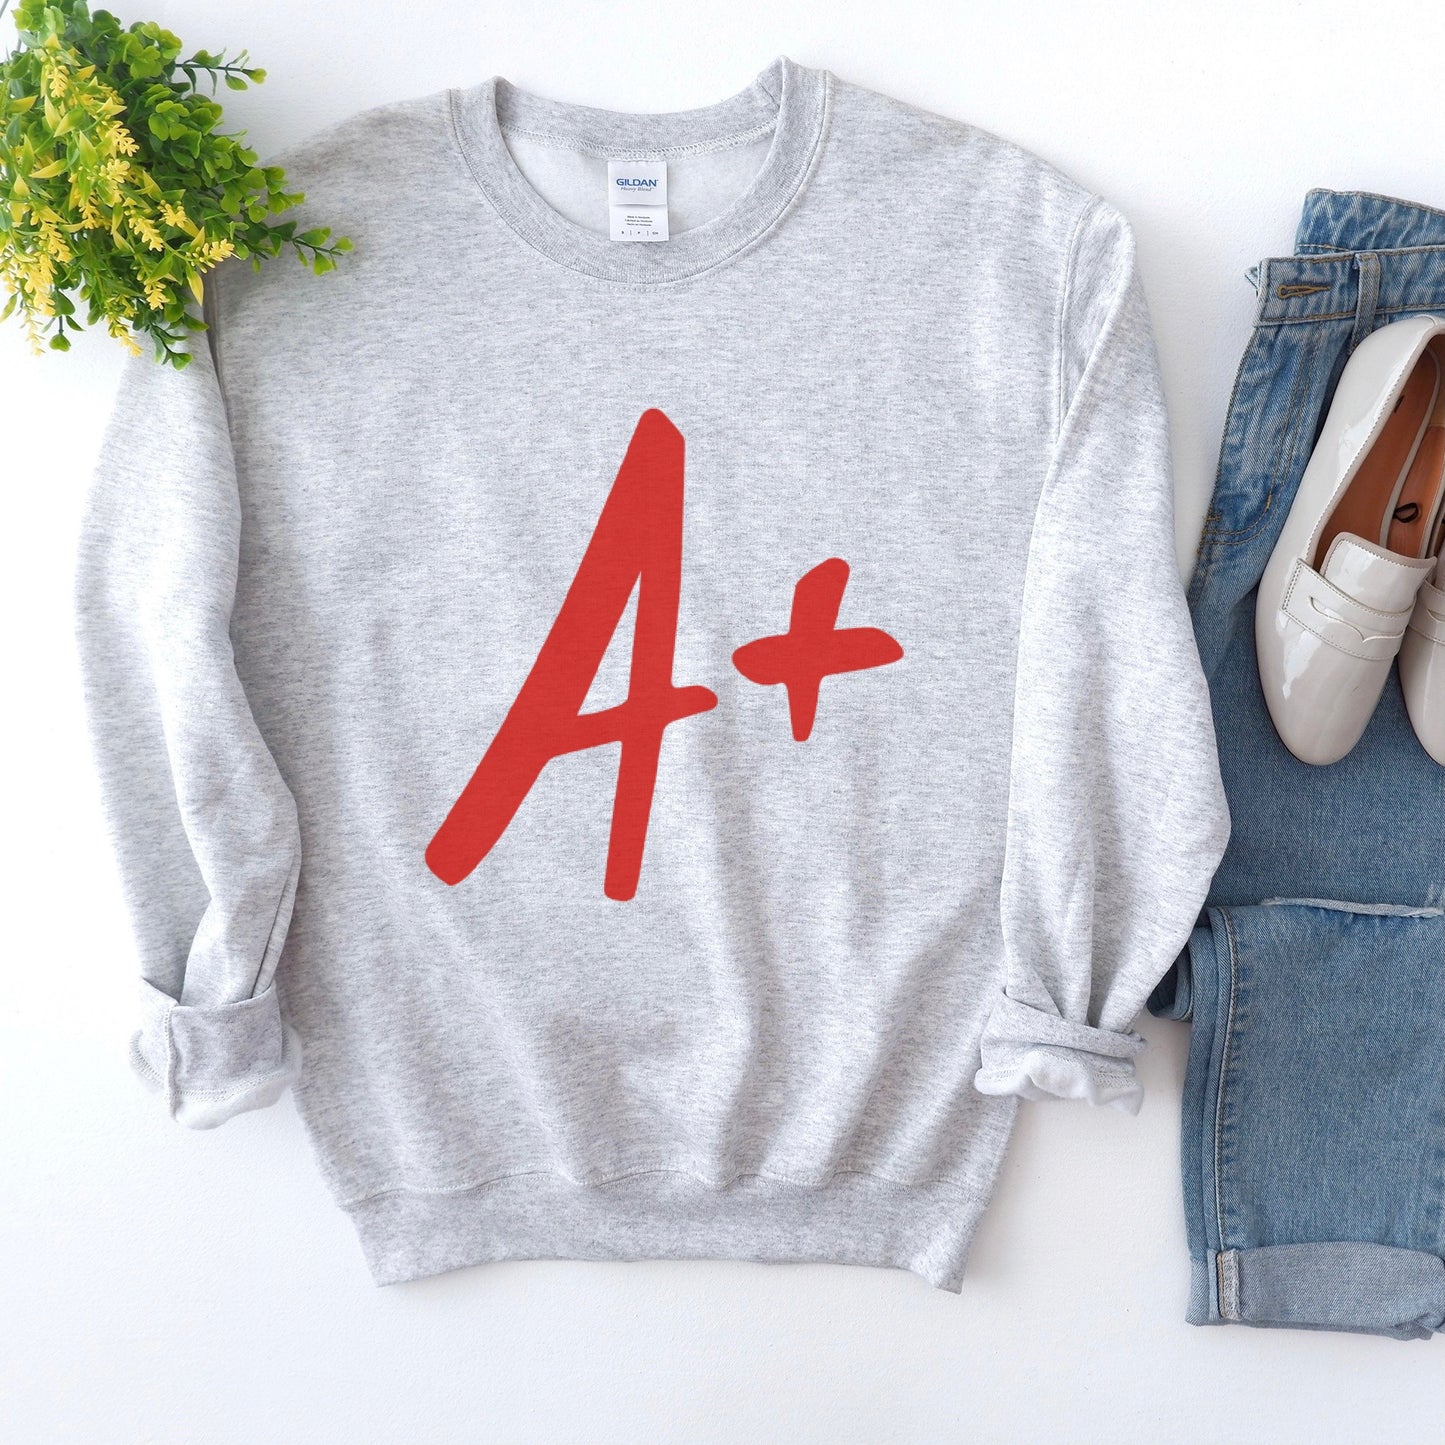 A+ Sweatshirt